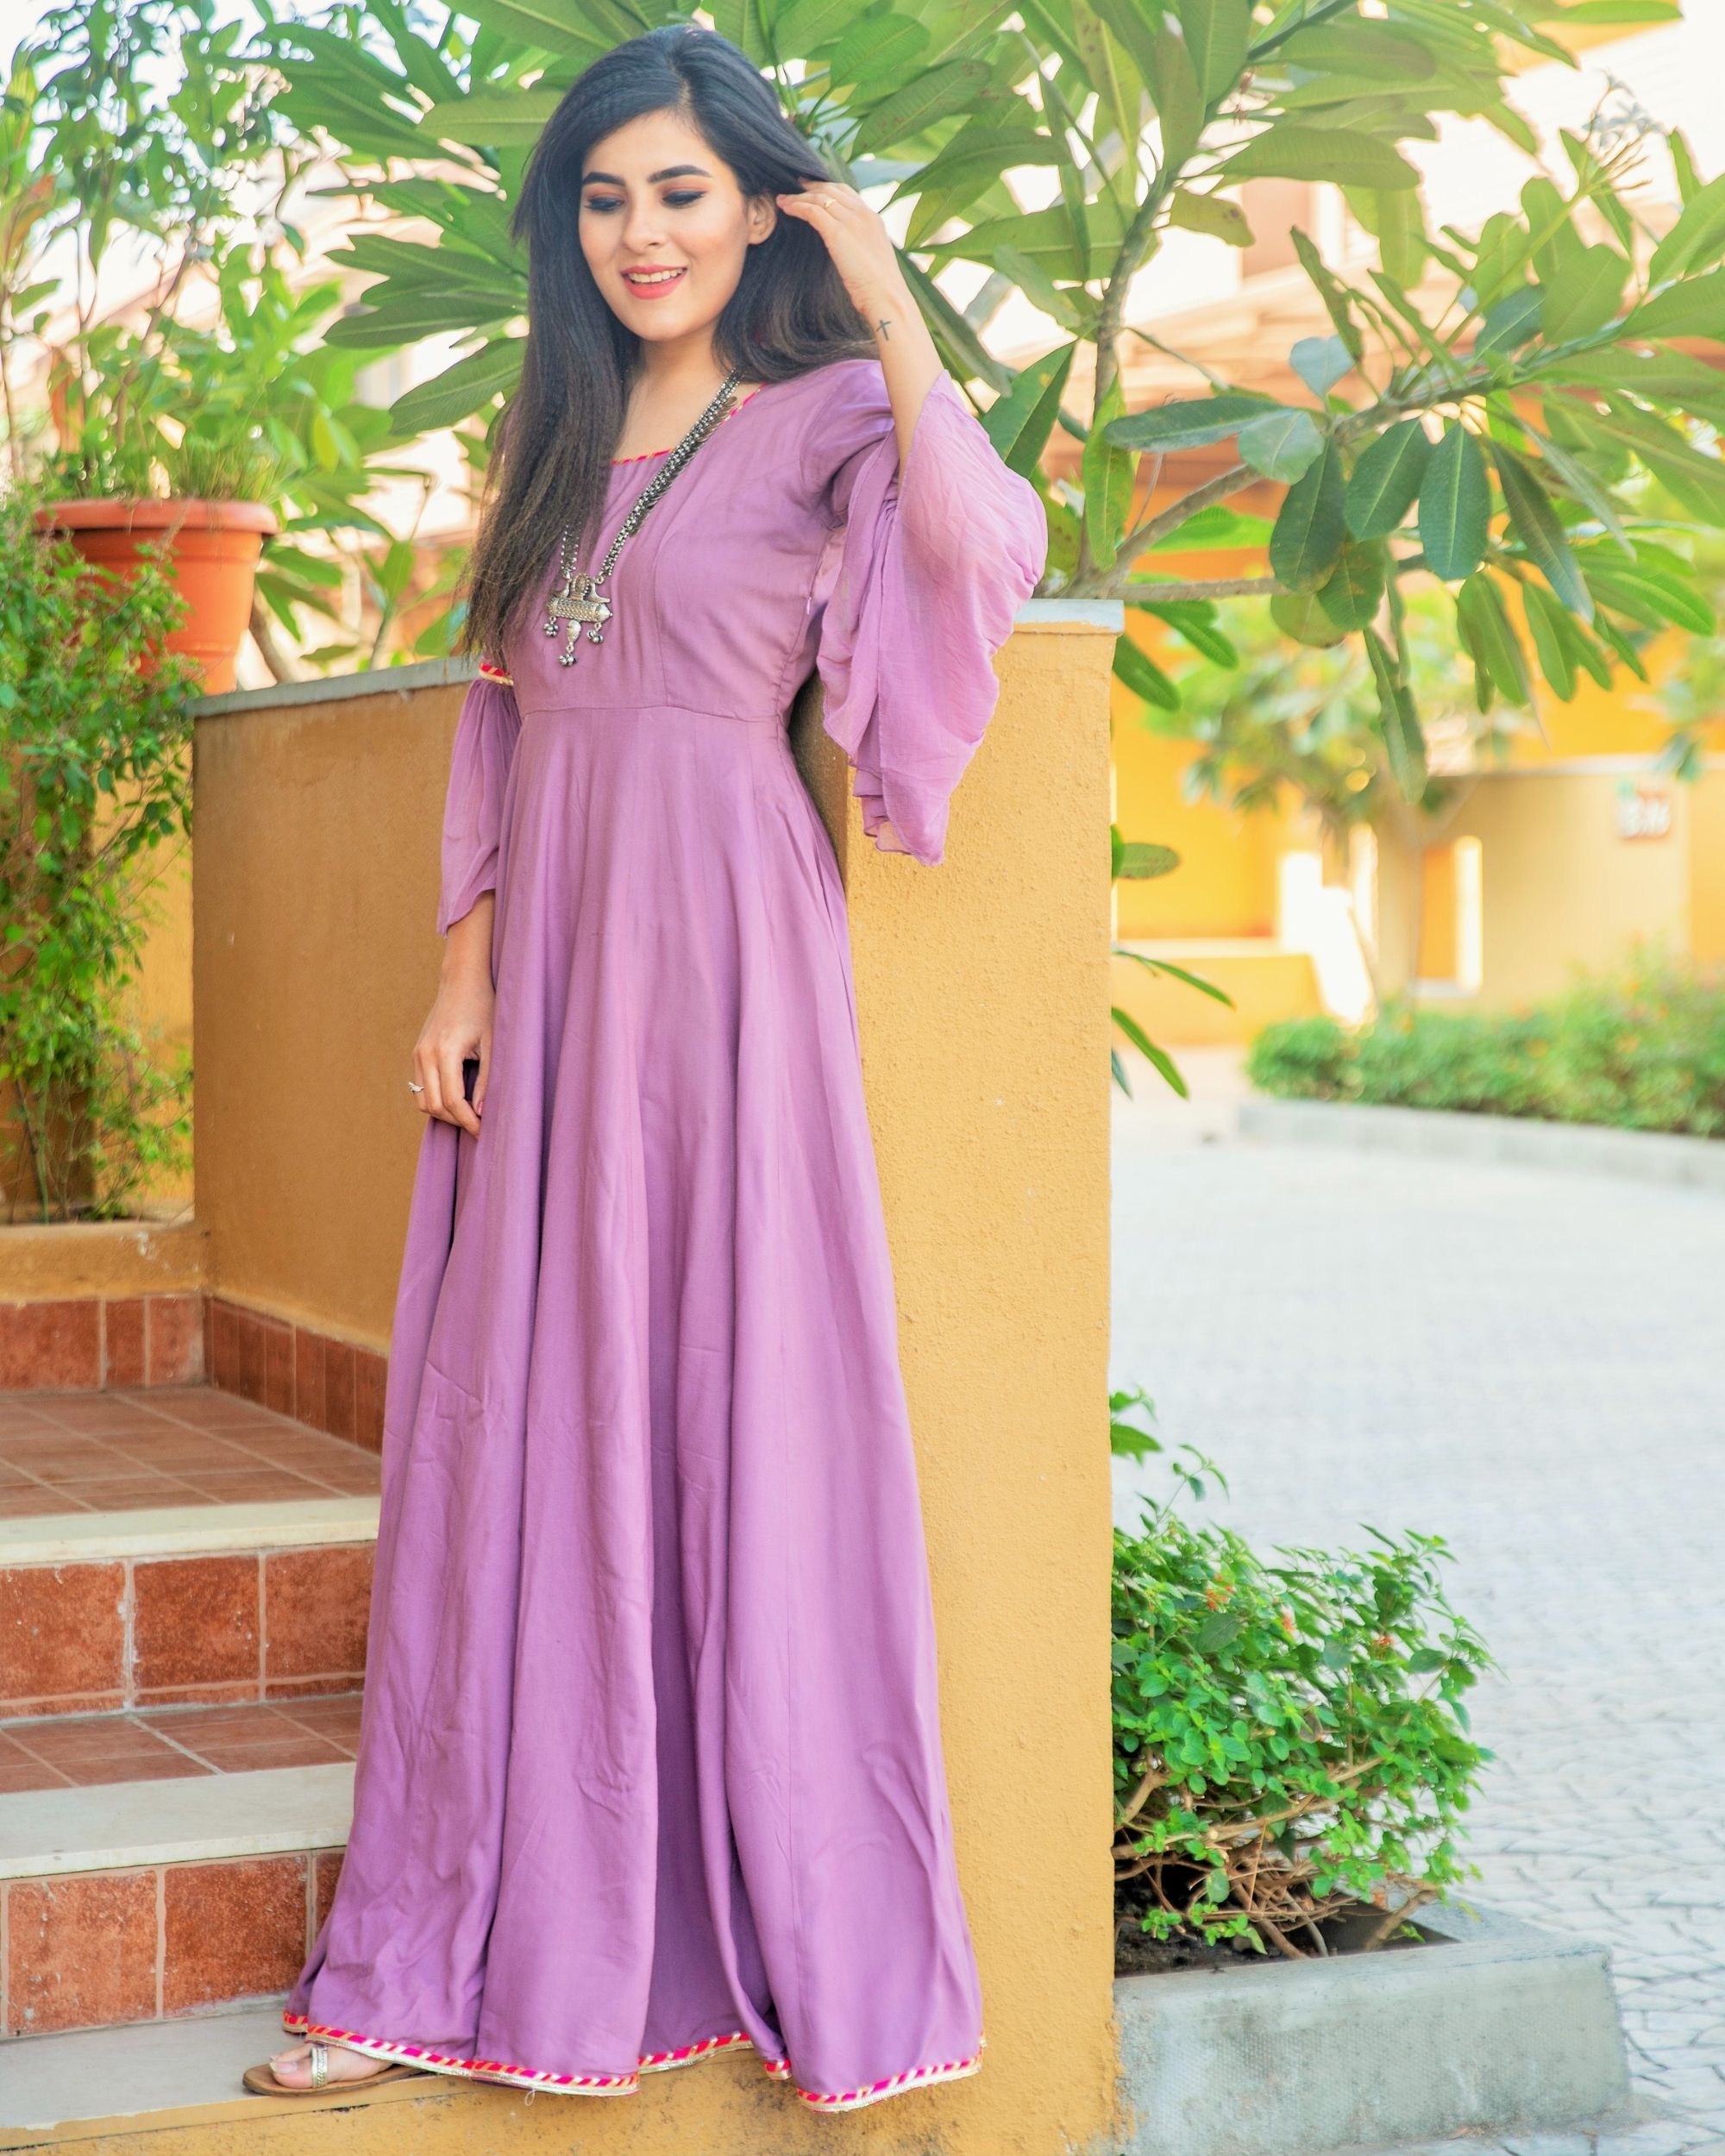 Lavender flared ruffled dress by Shreetatvam | The Secret Label